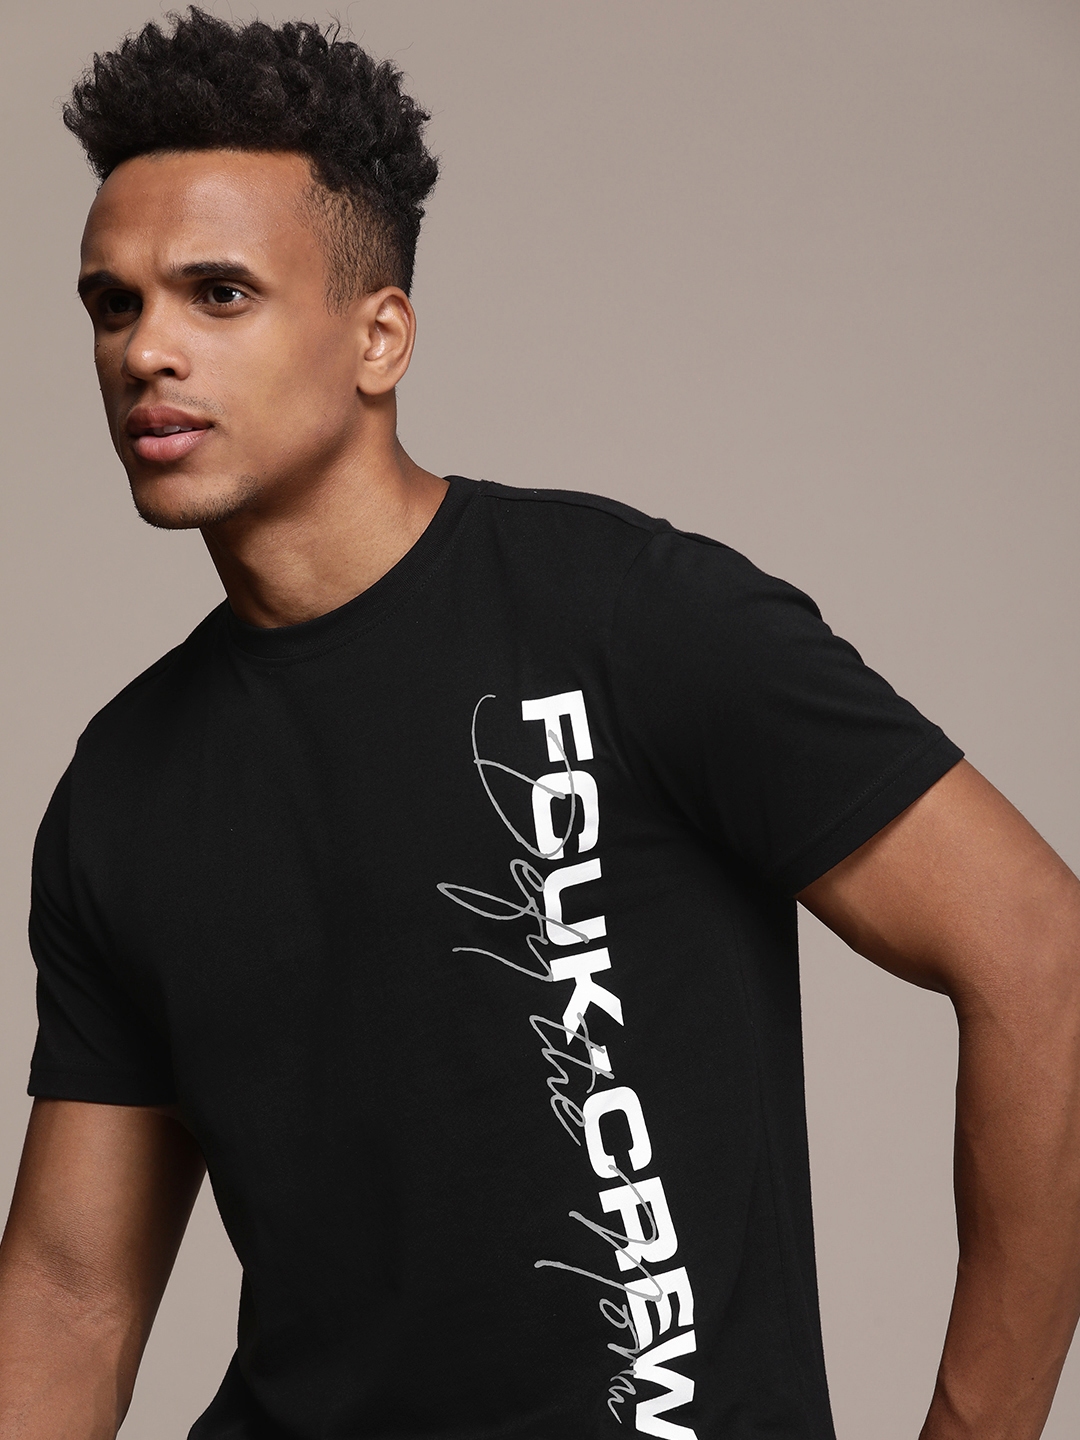 Buy FCUK Brand Logo Printed Pure Cotton T Shirt - Tshirts for Men ...